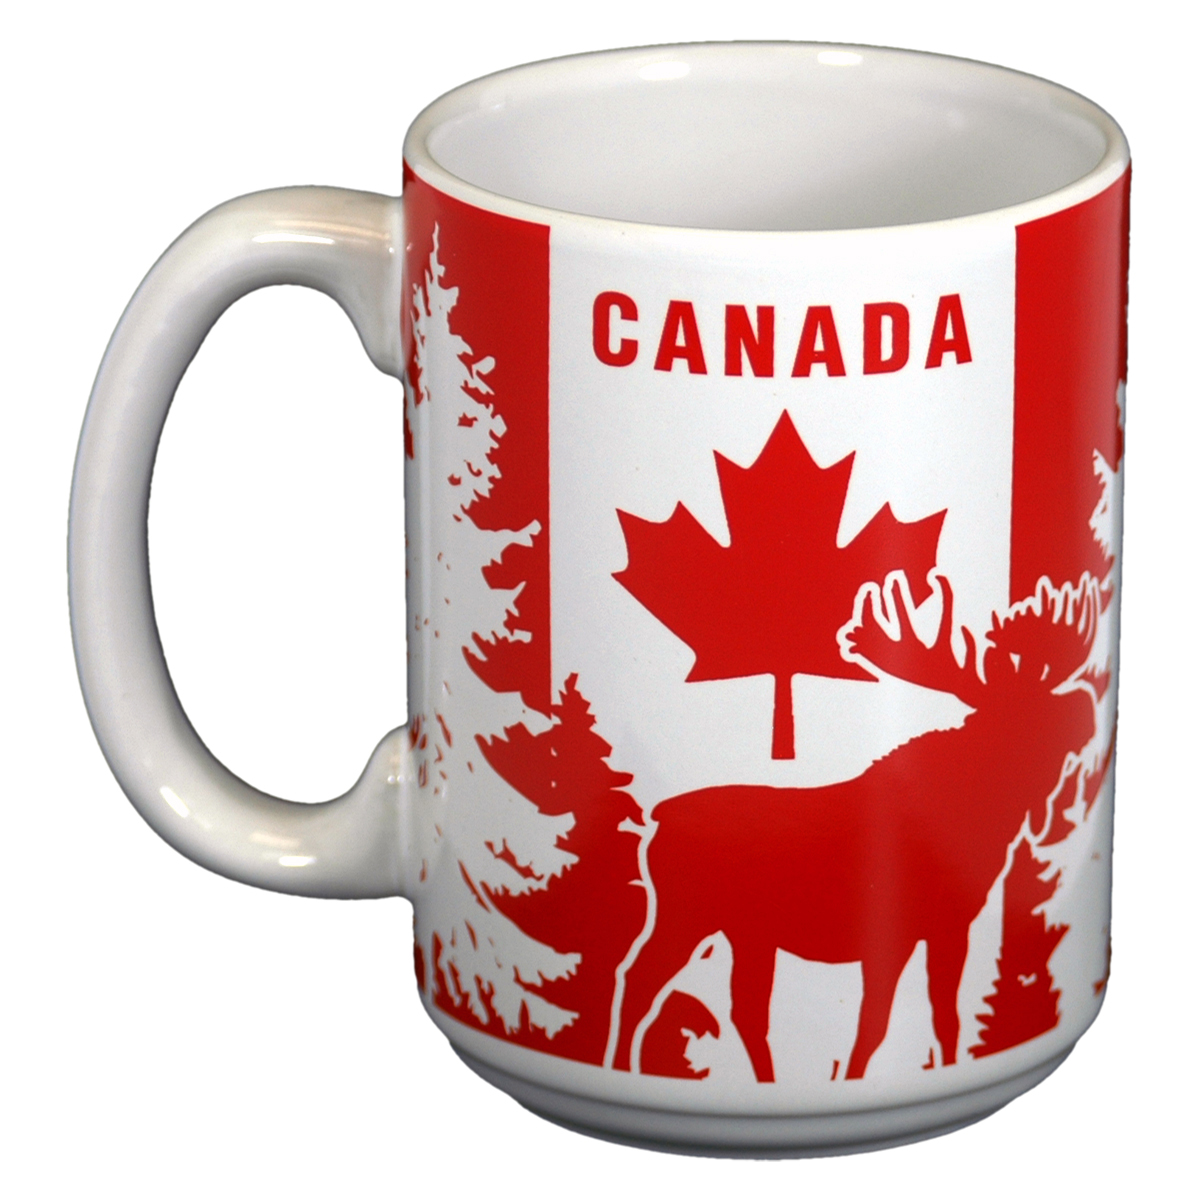 Canada Scenery Mug 89991JE Fun Canada Souvenir Gifts Coffee Tea Mug Featuring Moose Canadian Emblems 15-Ounce Capacity